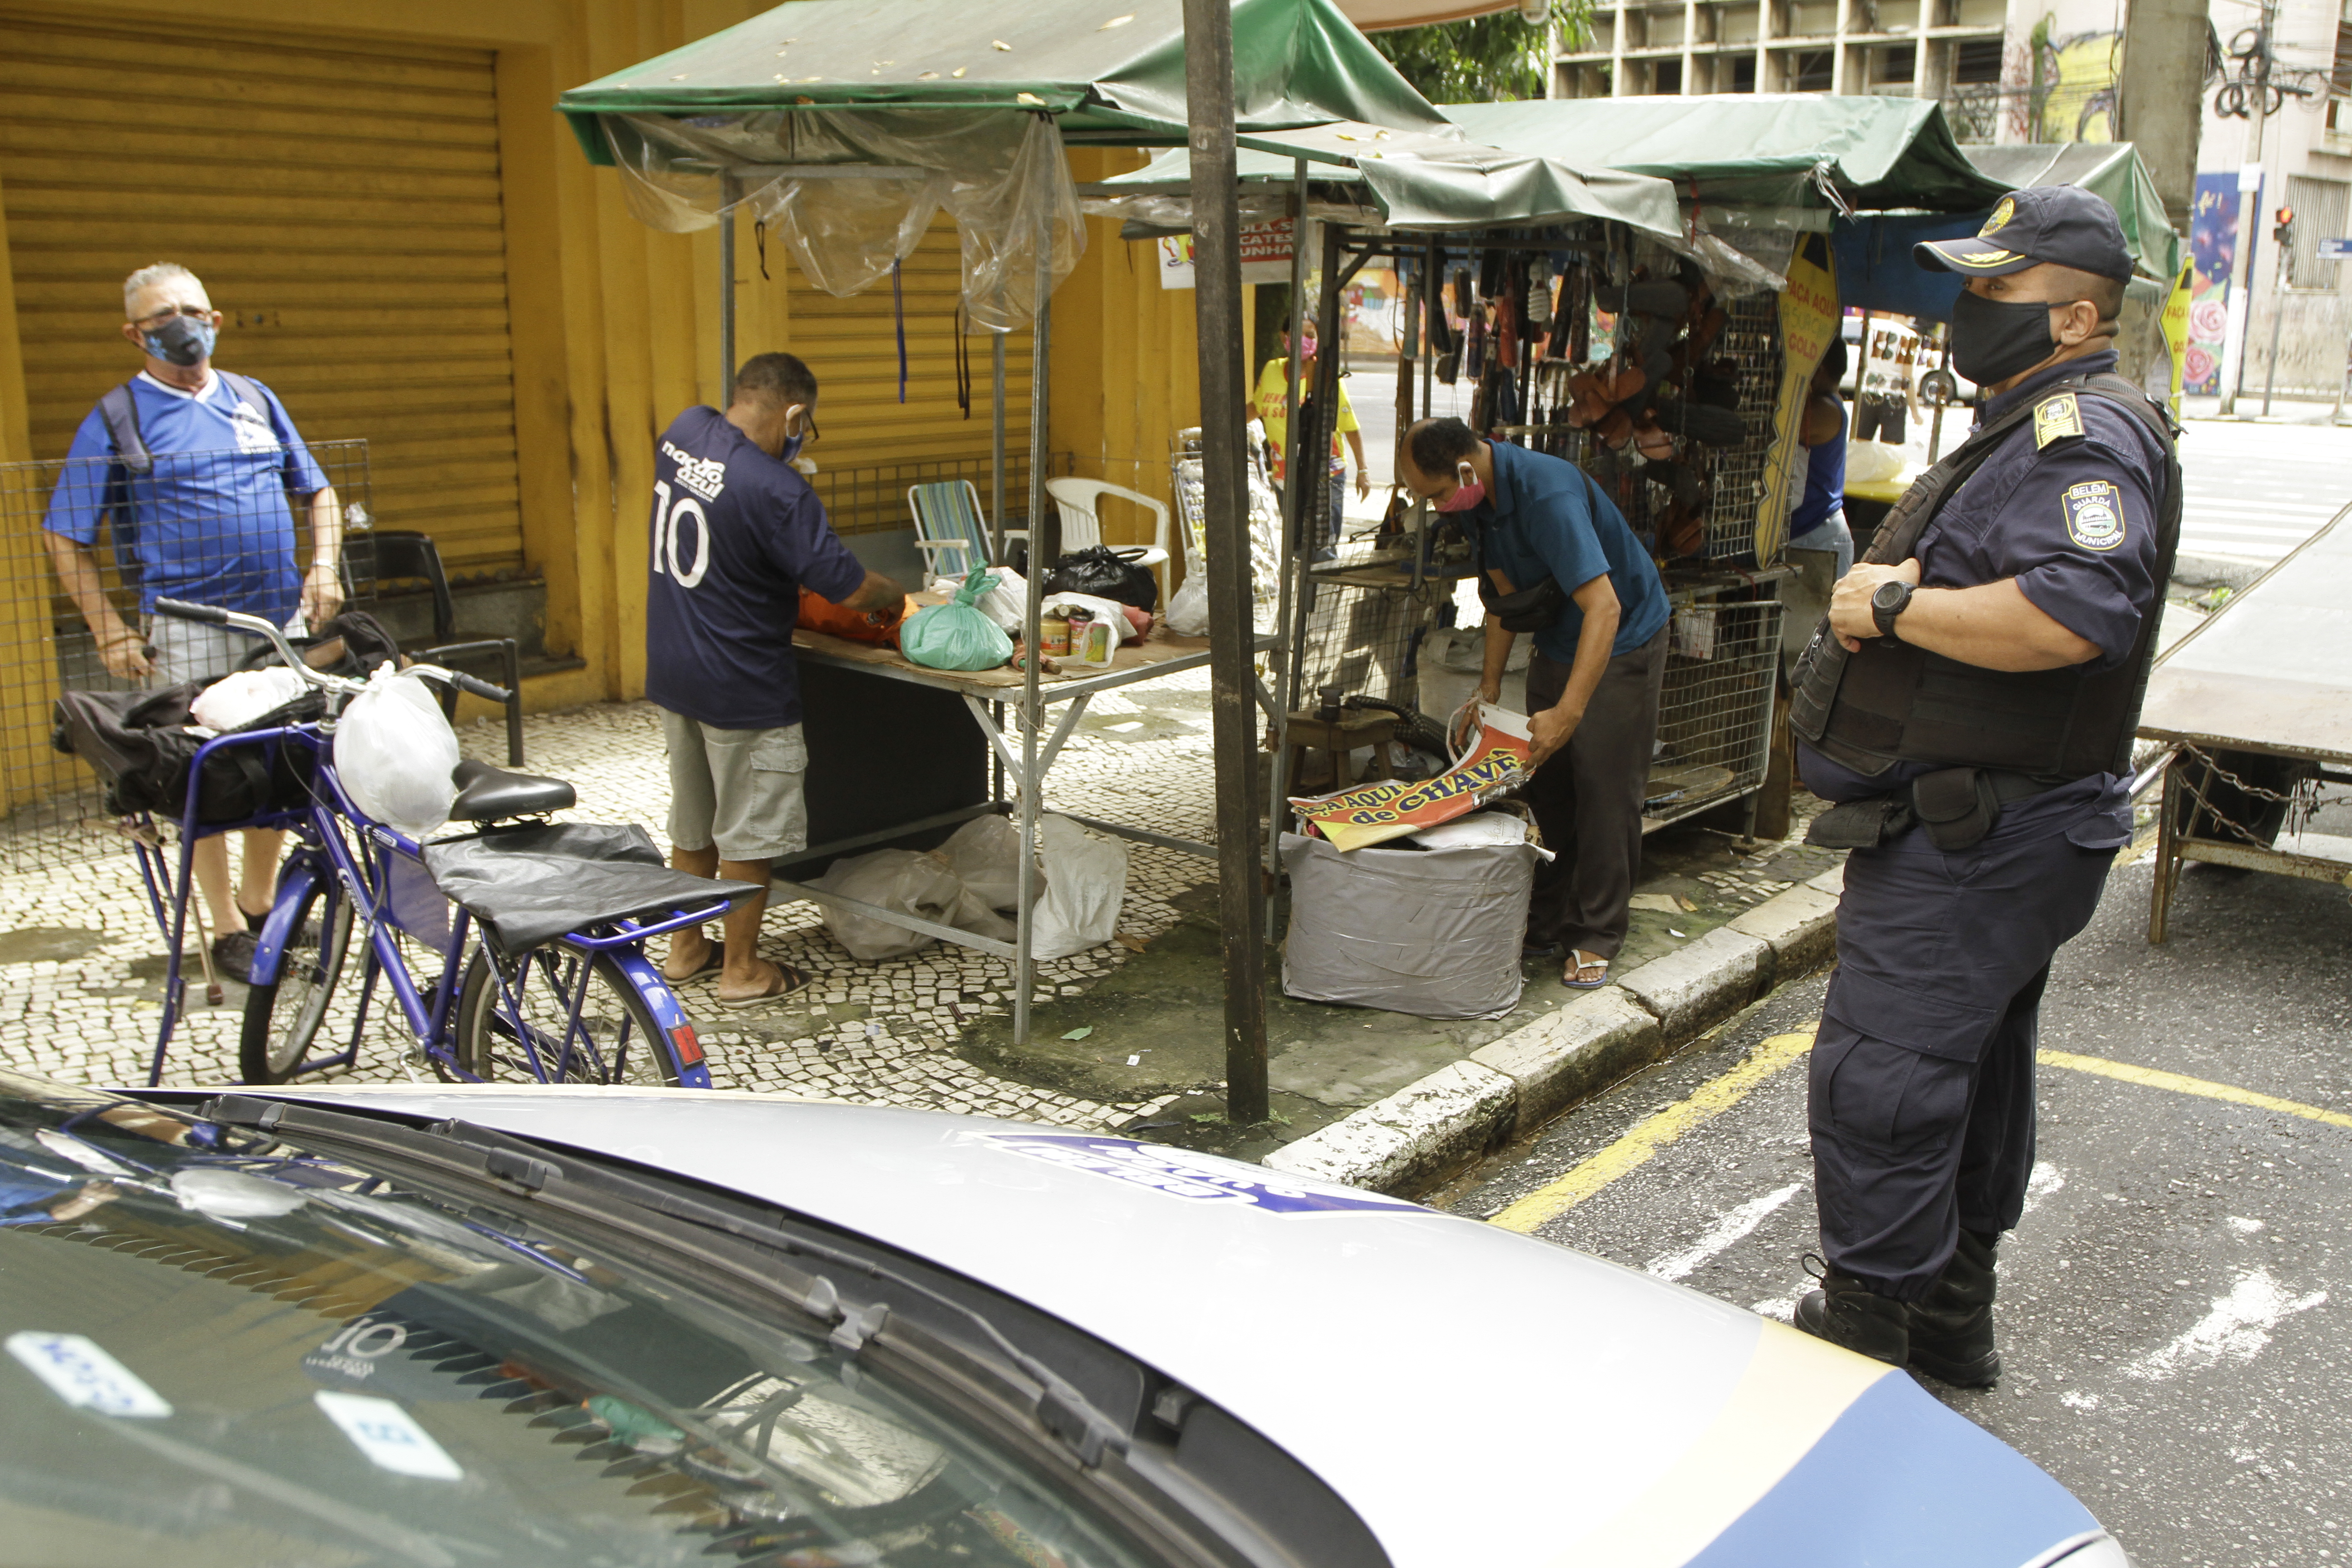 2020.05.09 - PA  - Belém - Brasil: Guarda Municipal fiscaliza o cumprimento do lockdown no centro comercial.